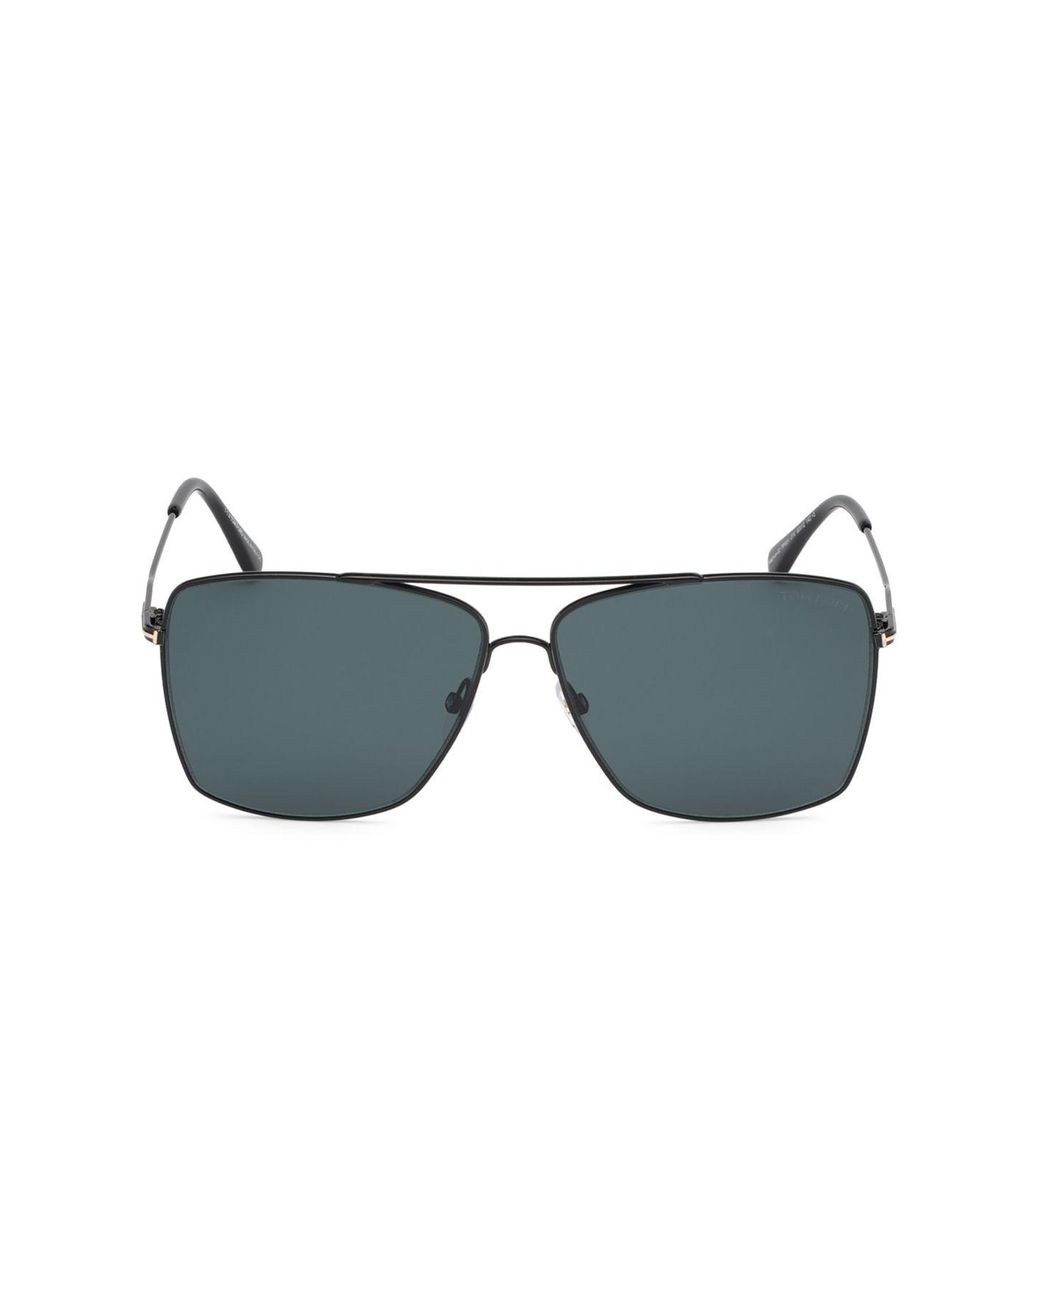 Tom Ford Magnus 60mm Square Aviator Sunglasses in Black Pattern (Black ...